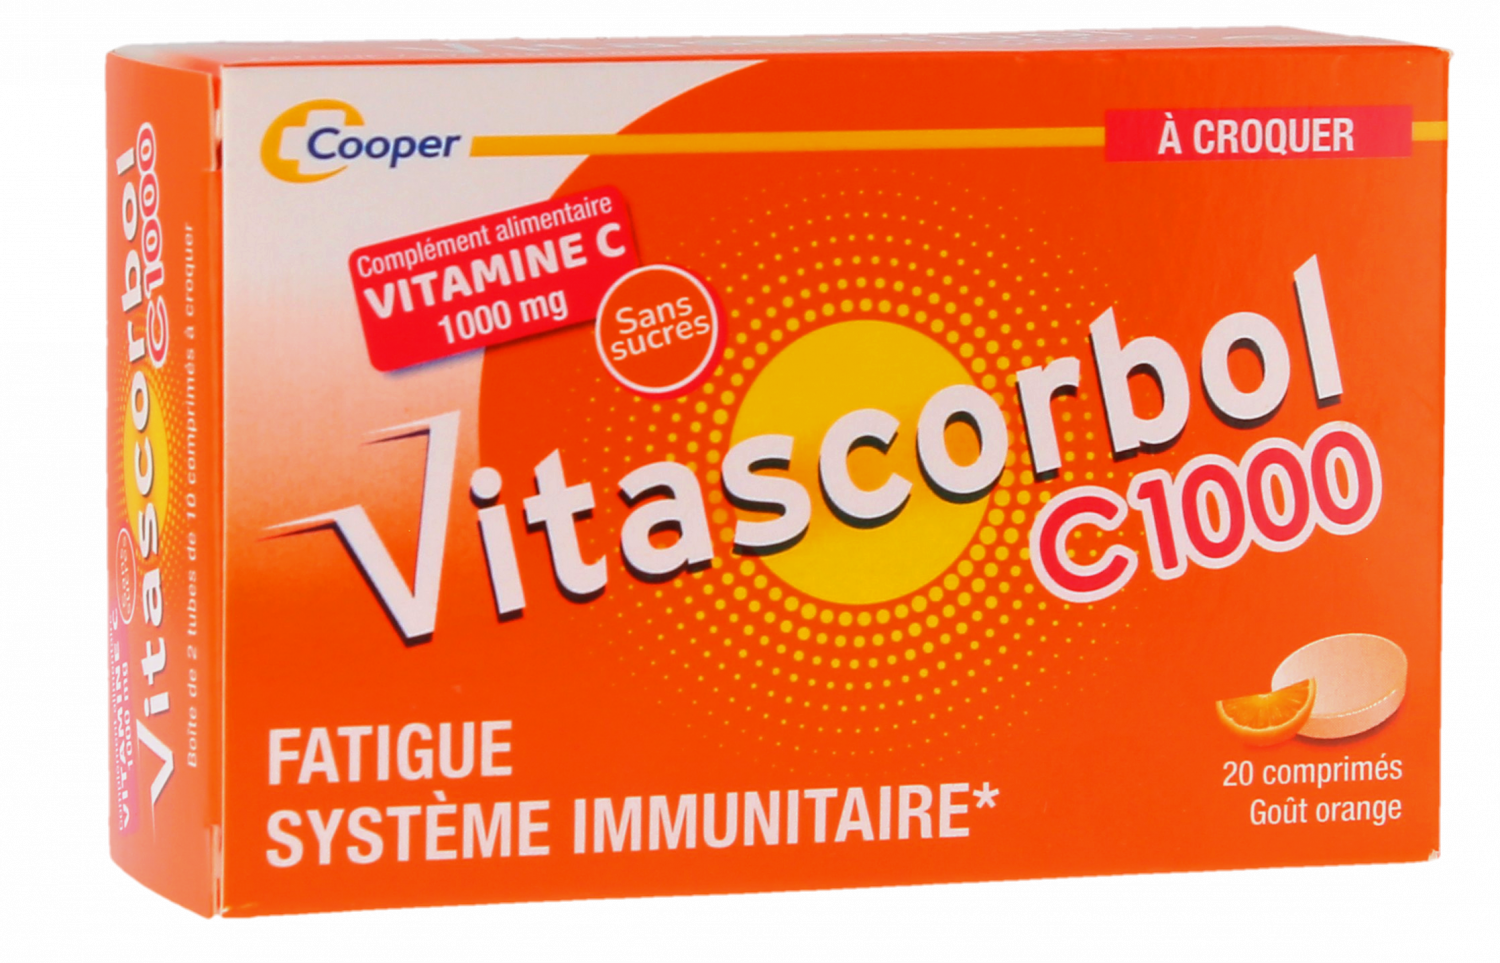 Vitascorbol C1000 vitamine C Cooper - boîte de 20 comprimés à croquer